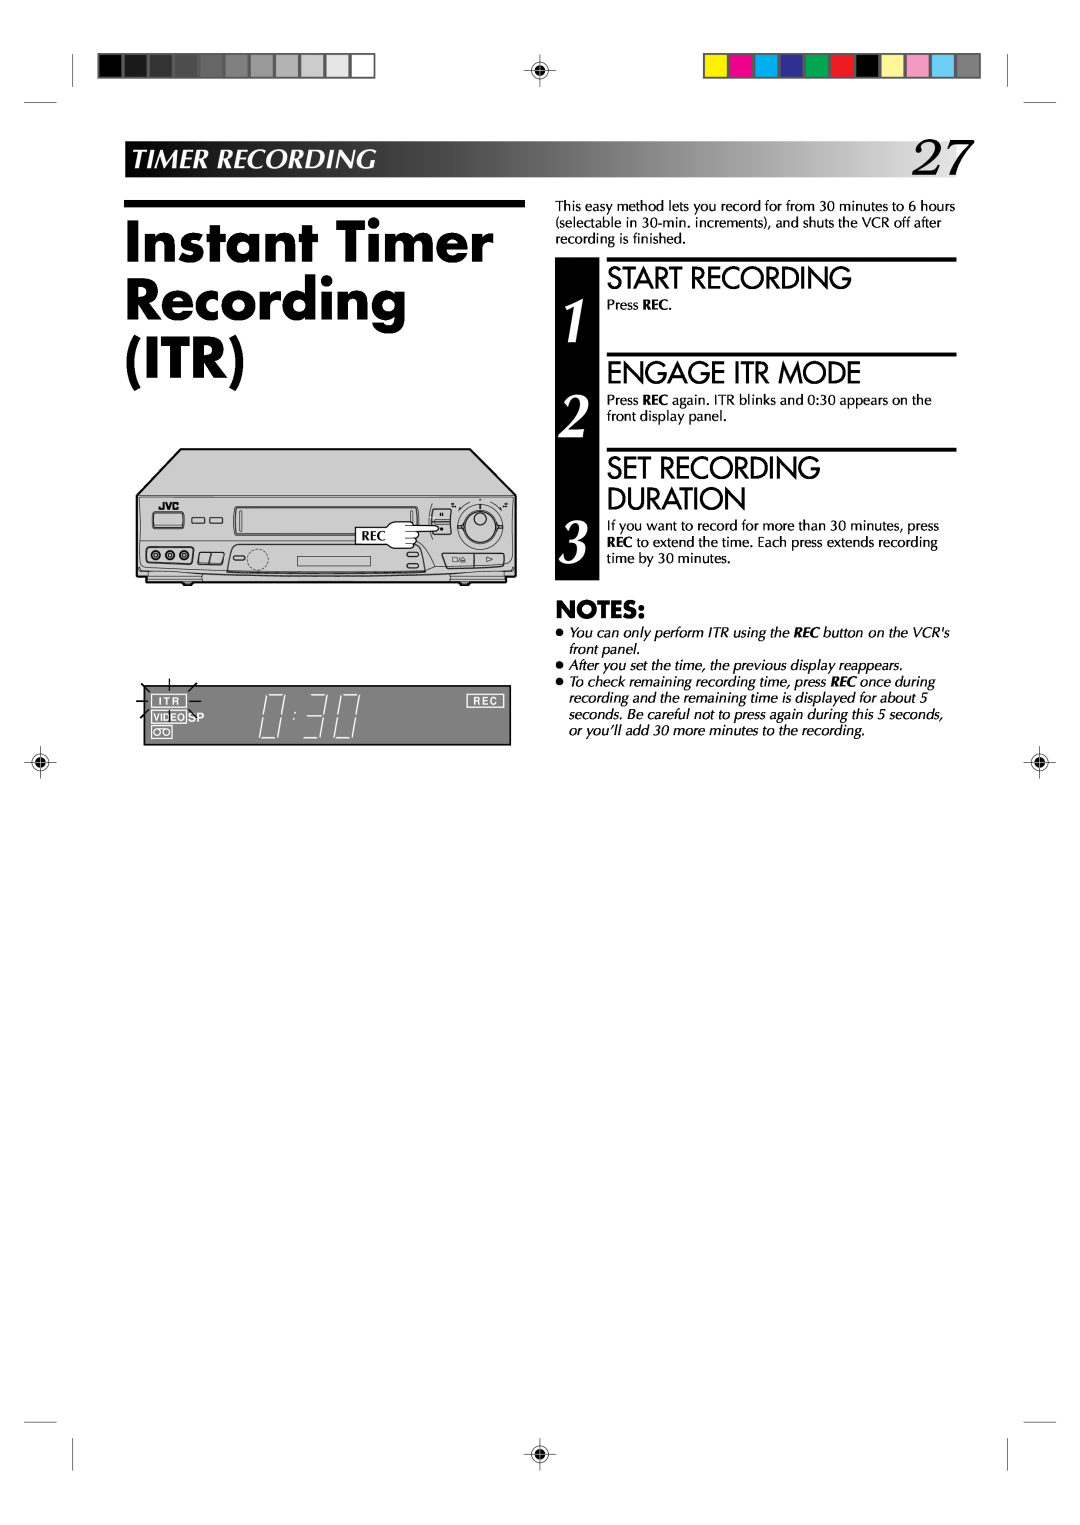 JVC HR-J631T manual Instant Timer Recording ITR, Engage Itr Mode, Set Recording Duration, Timerrecording, Start Recording 